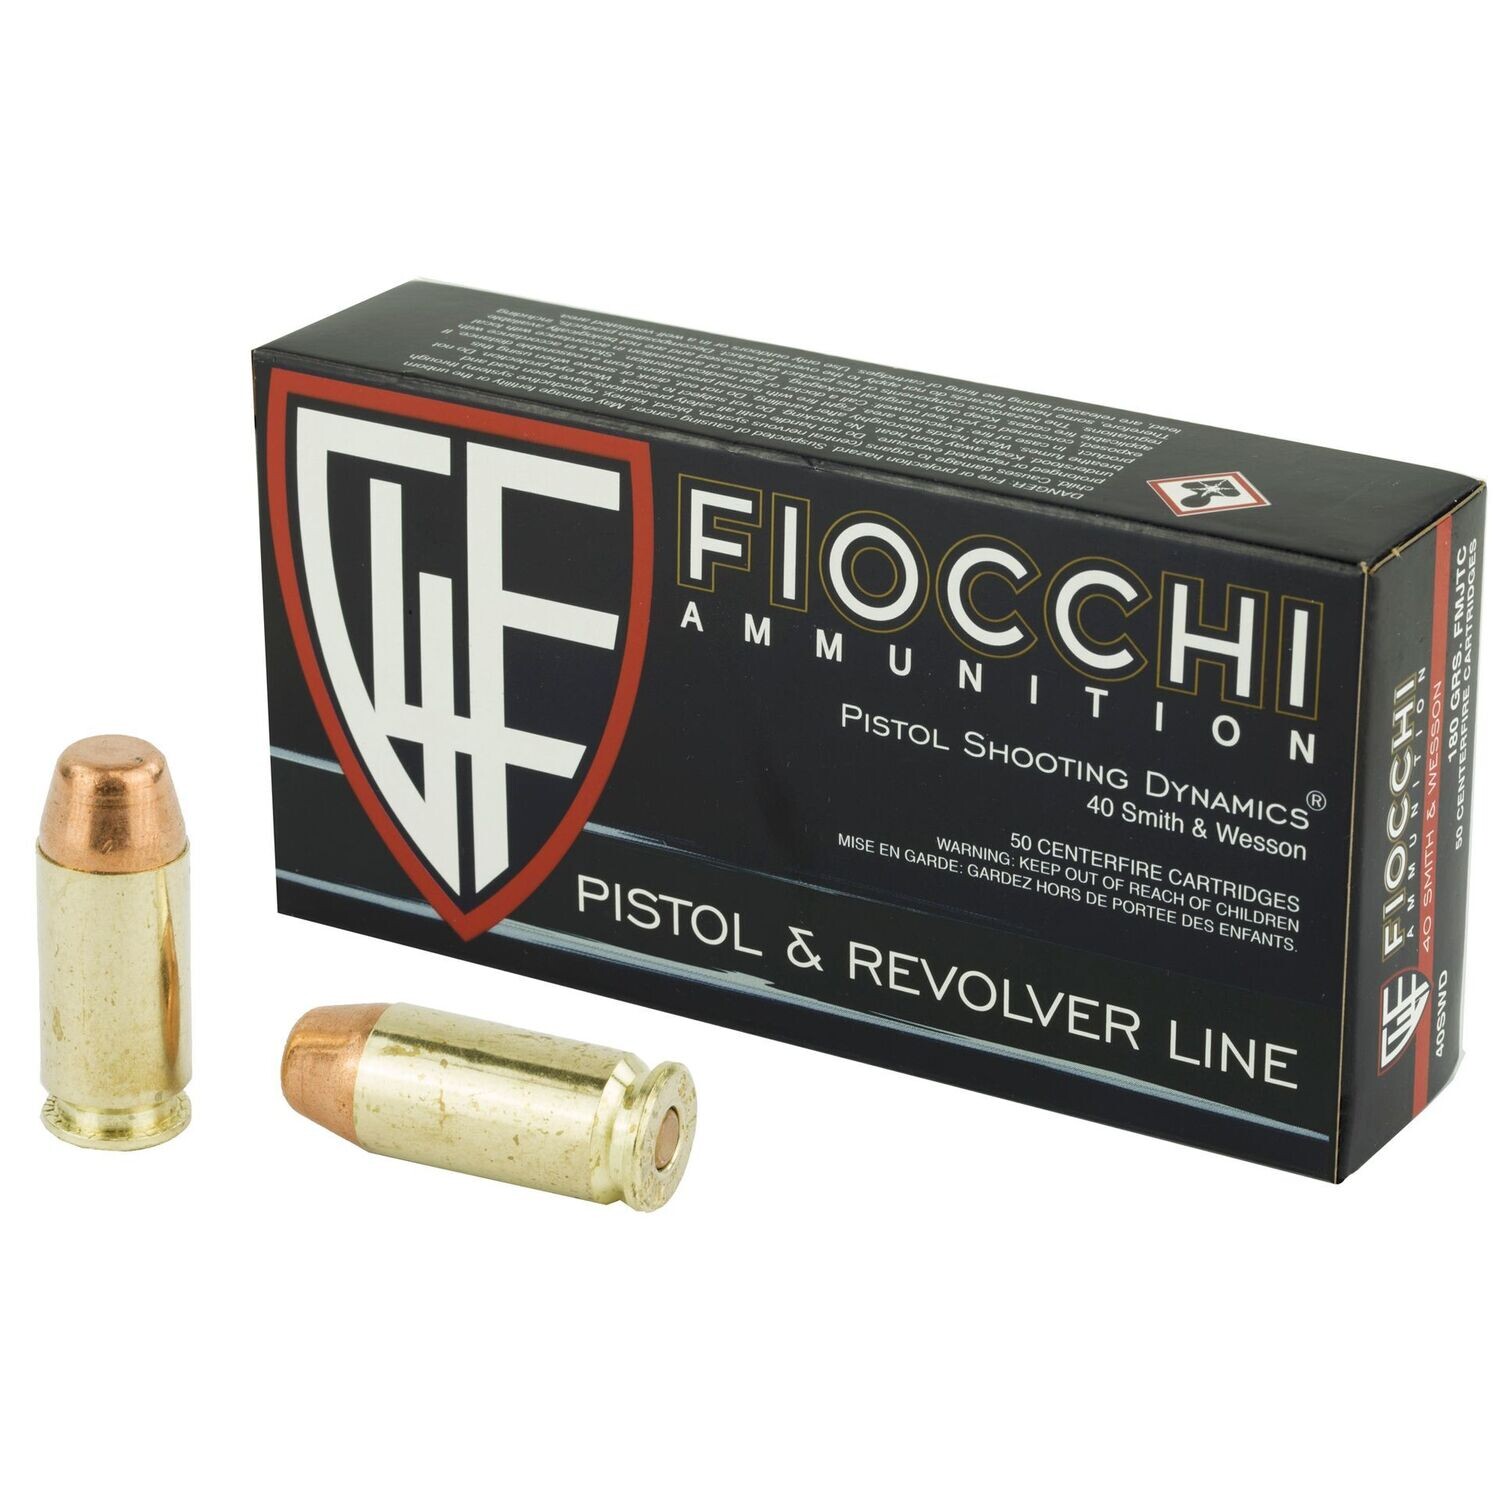 Fiocchi Ammunition, Centerfire Pistol, 40S&W, 180 Grain, Full Metal Jacket, 50 Round Box